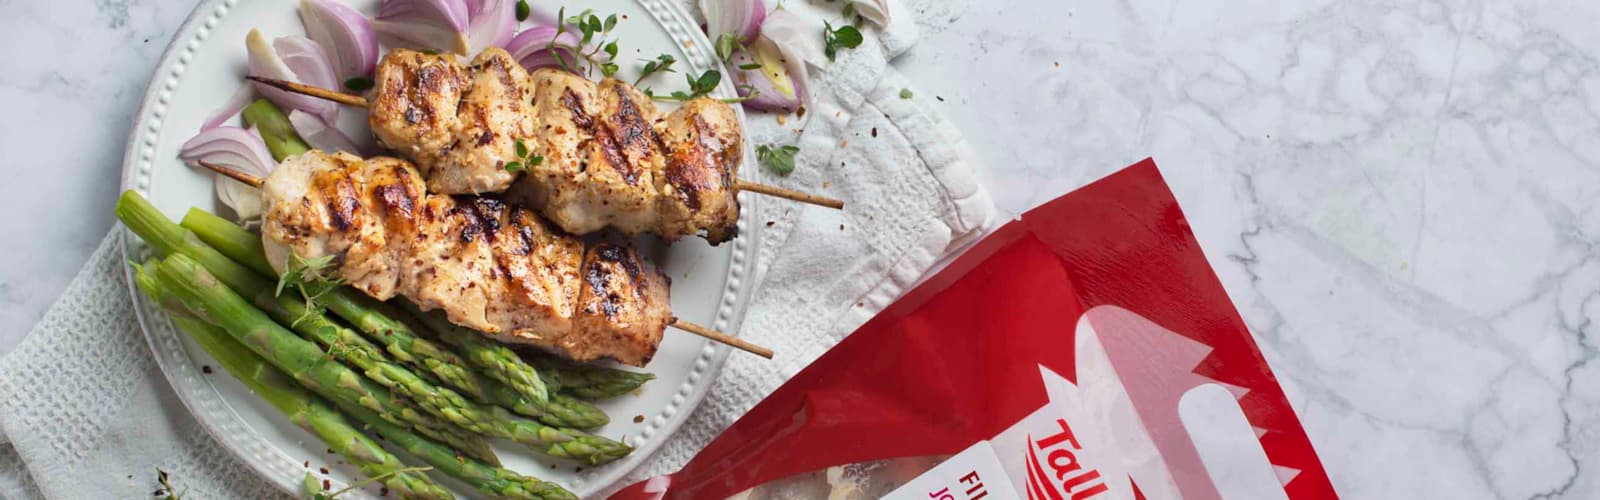 Tallegg chicken fillet shaslik in joghurt pack web